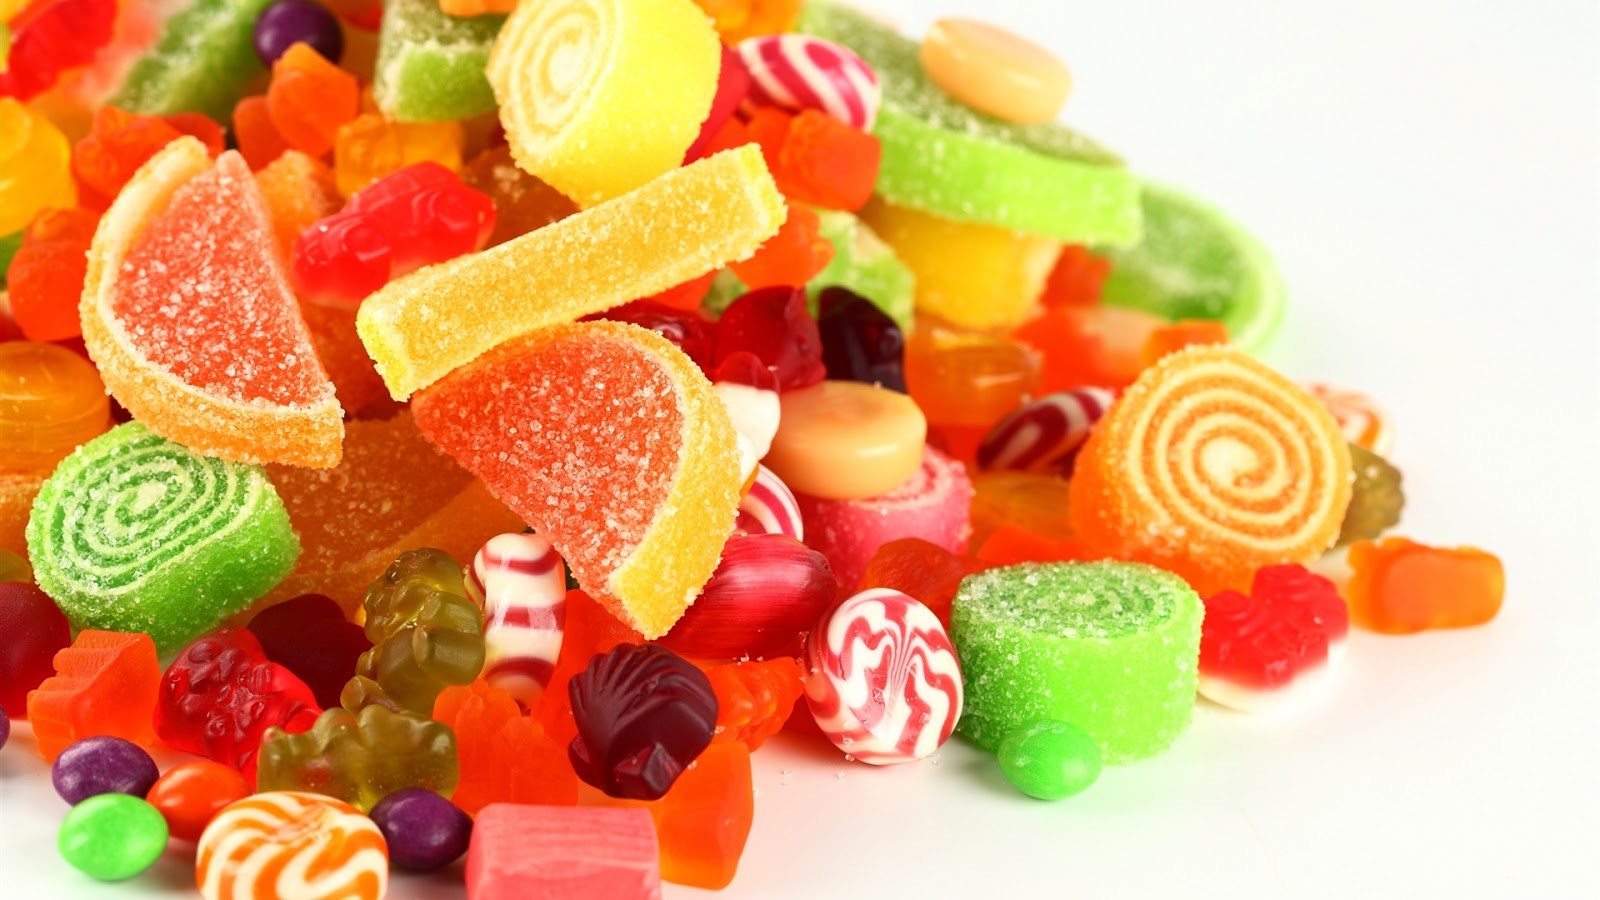 http://4.bp.blogspot.com/-QVW3CUUjKfo/UVf9Xv9-OCI/AAAAAAAASnY/XHJFjPv8NzY/s1600/The-dazzling-colorful-candy-fruit-sugar_1080.jpg